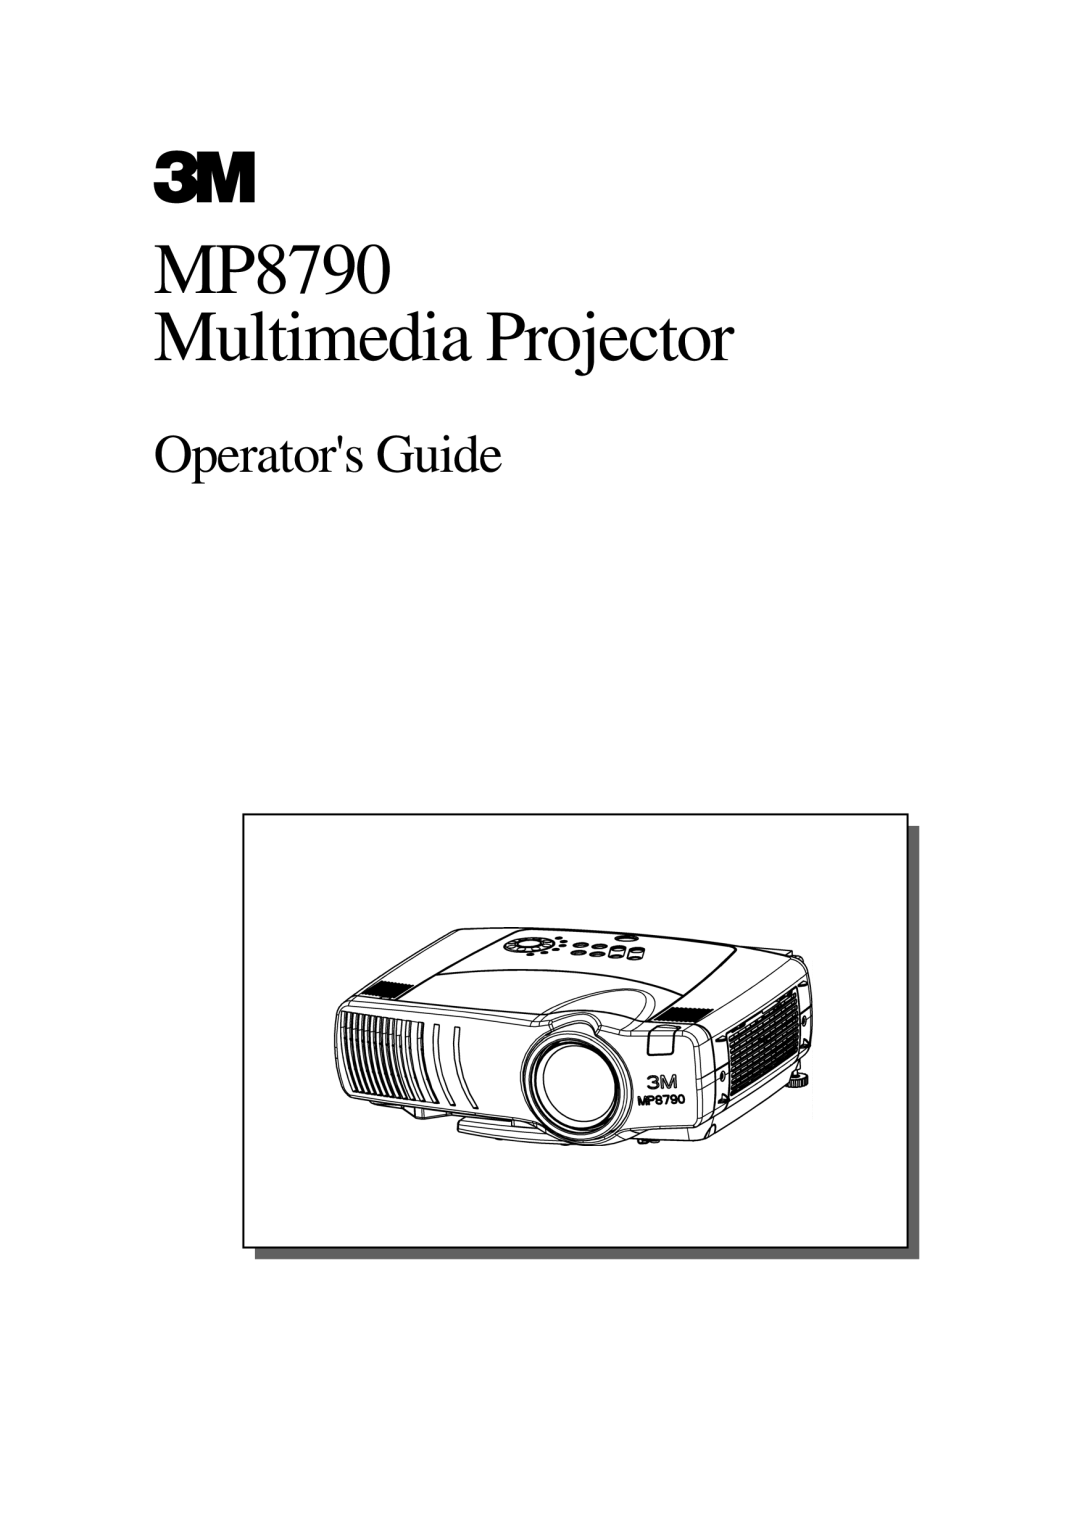 3M MP7650, MP7750 manual MP8790 Multimedia Projector, Operators Guide 